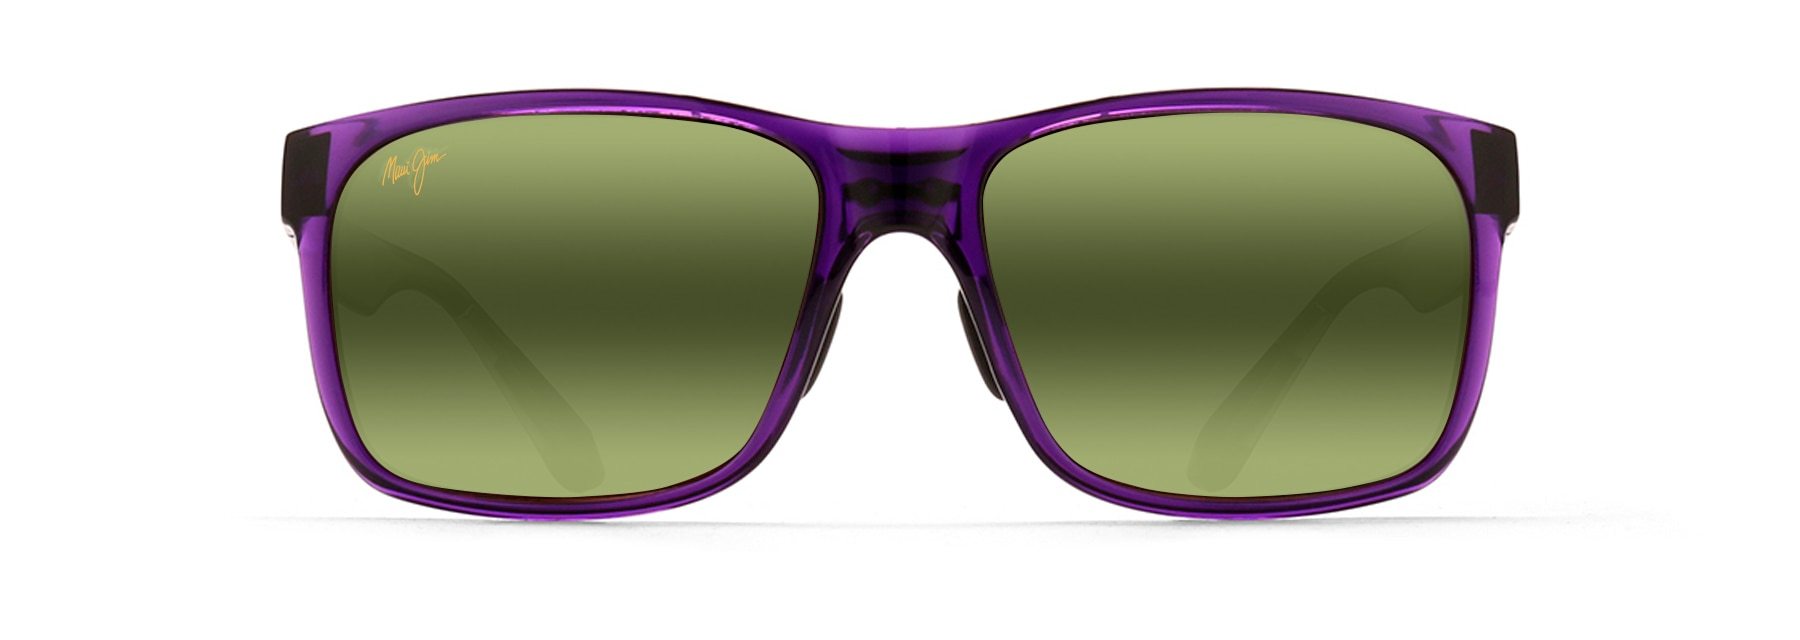 MyMaui Red Sands MM432-021 Sunglasses